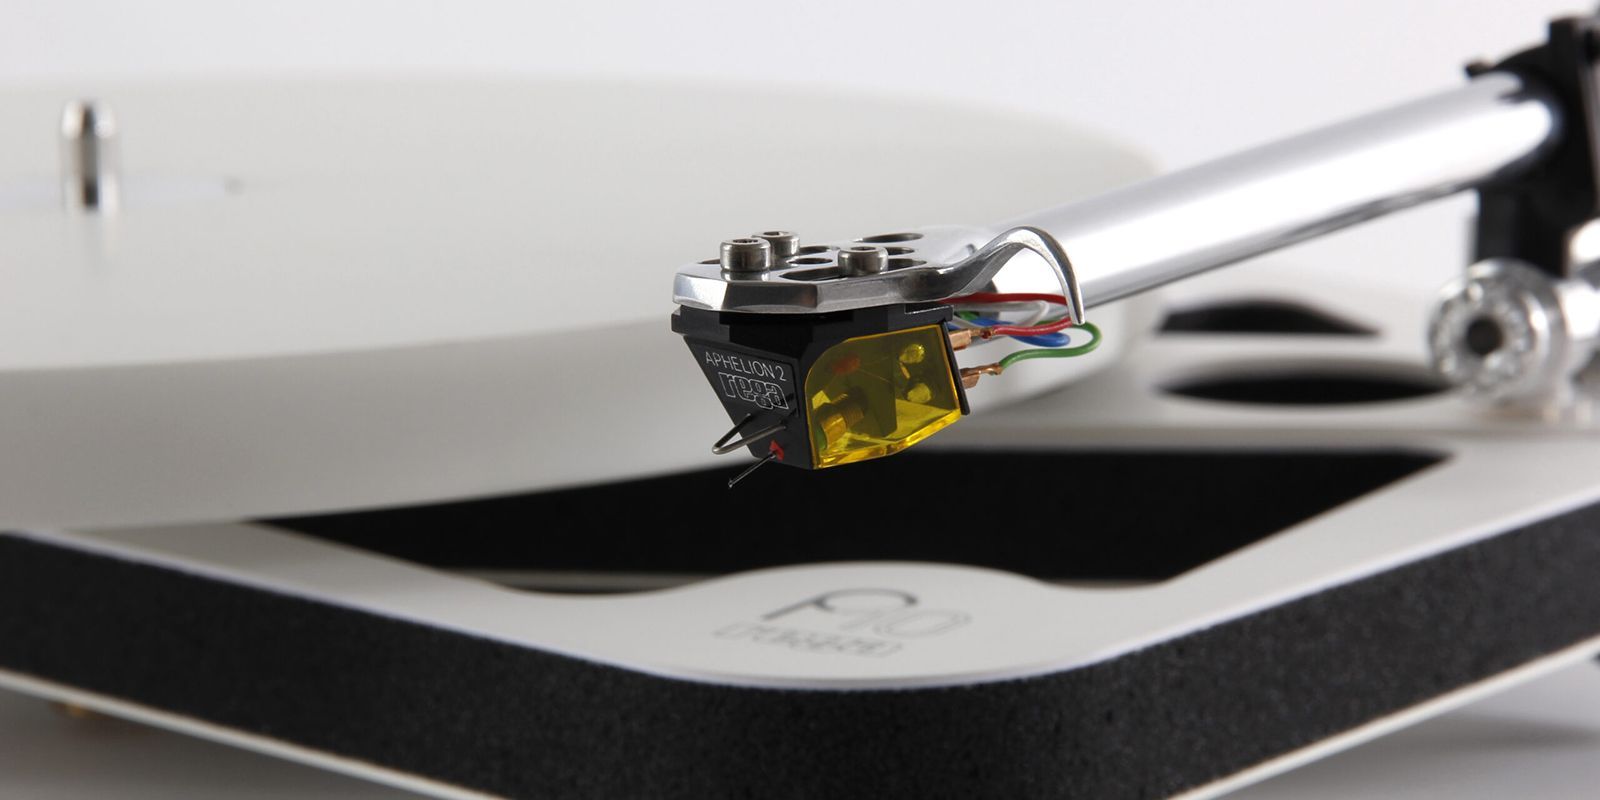 image of a rega Hi-Fi turntable cartridge used to enhance listening experience through your Hi-Fi system